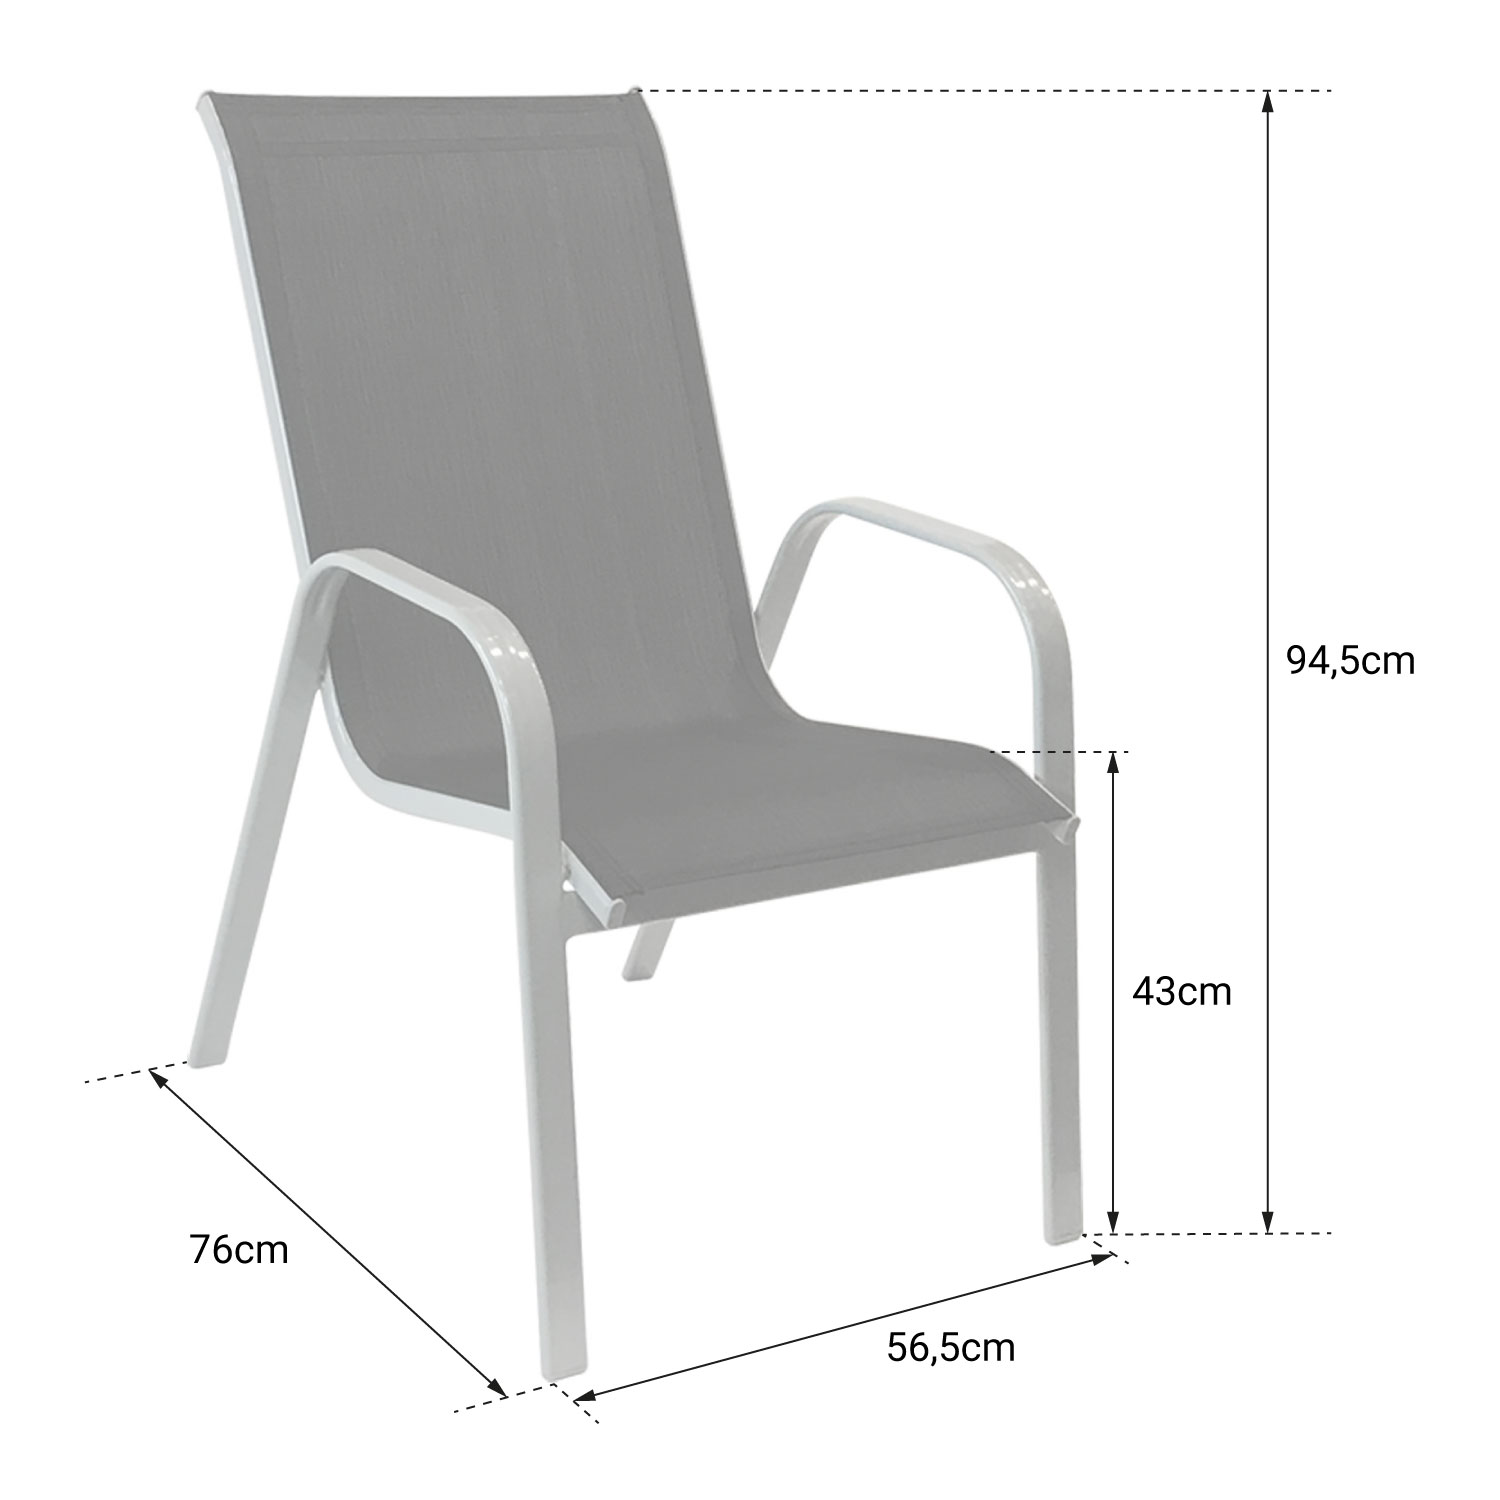 Lot de 4 chaises MARBELLA en textilène taupe - aluminium blanc